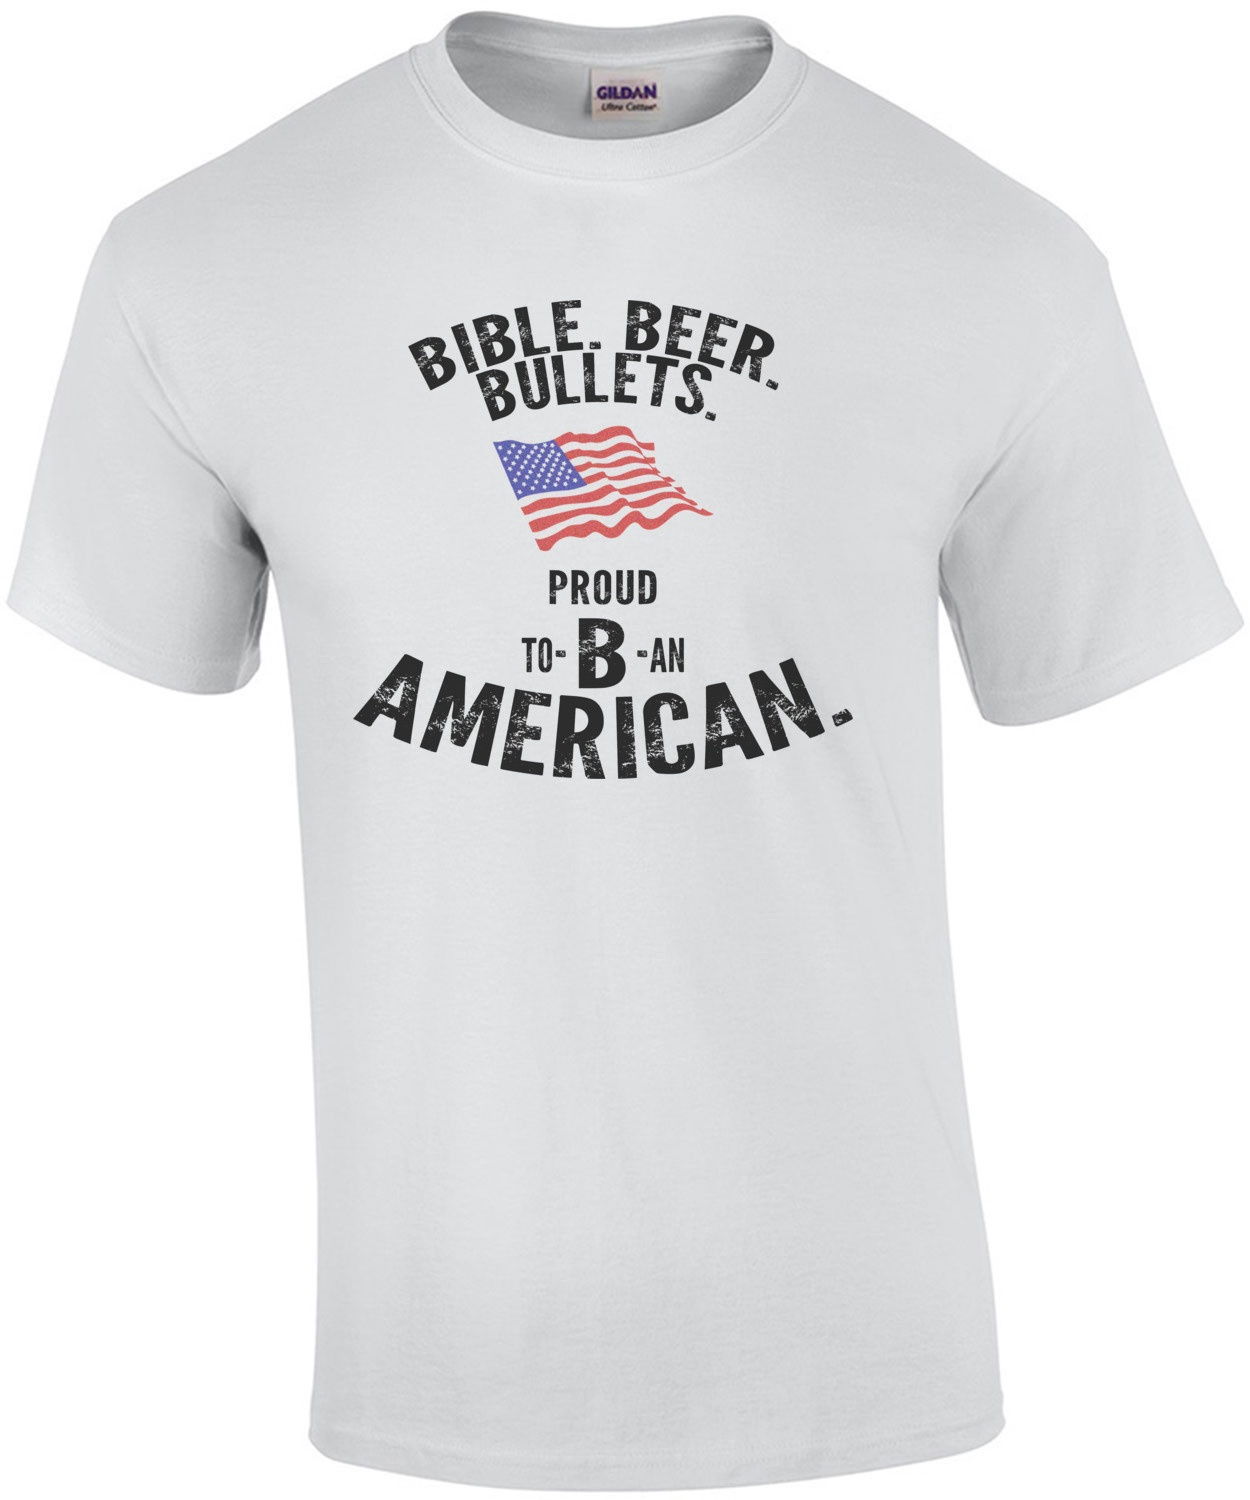 Bible. Beer. Bullets. Proud to B an American. Pro Gun T-Shirt